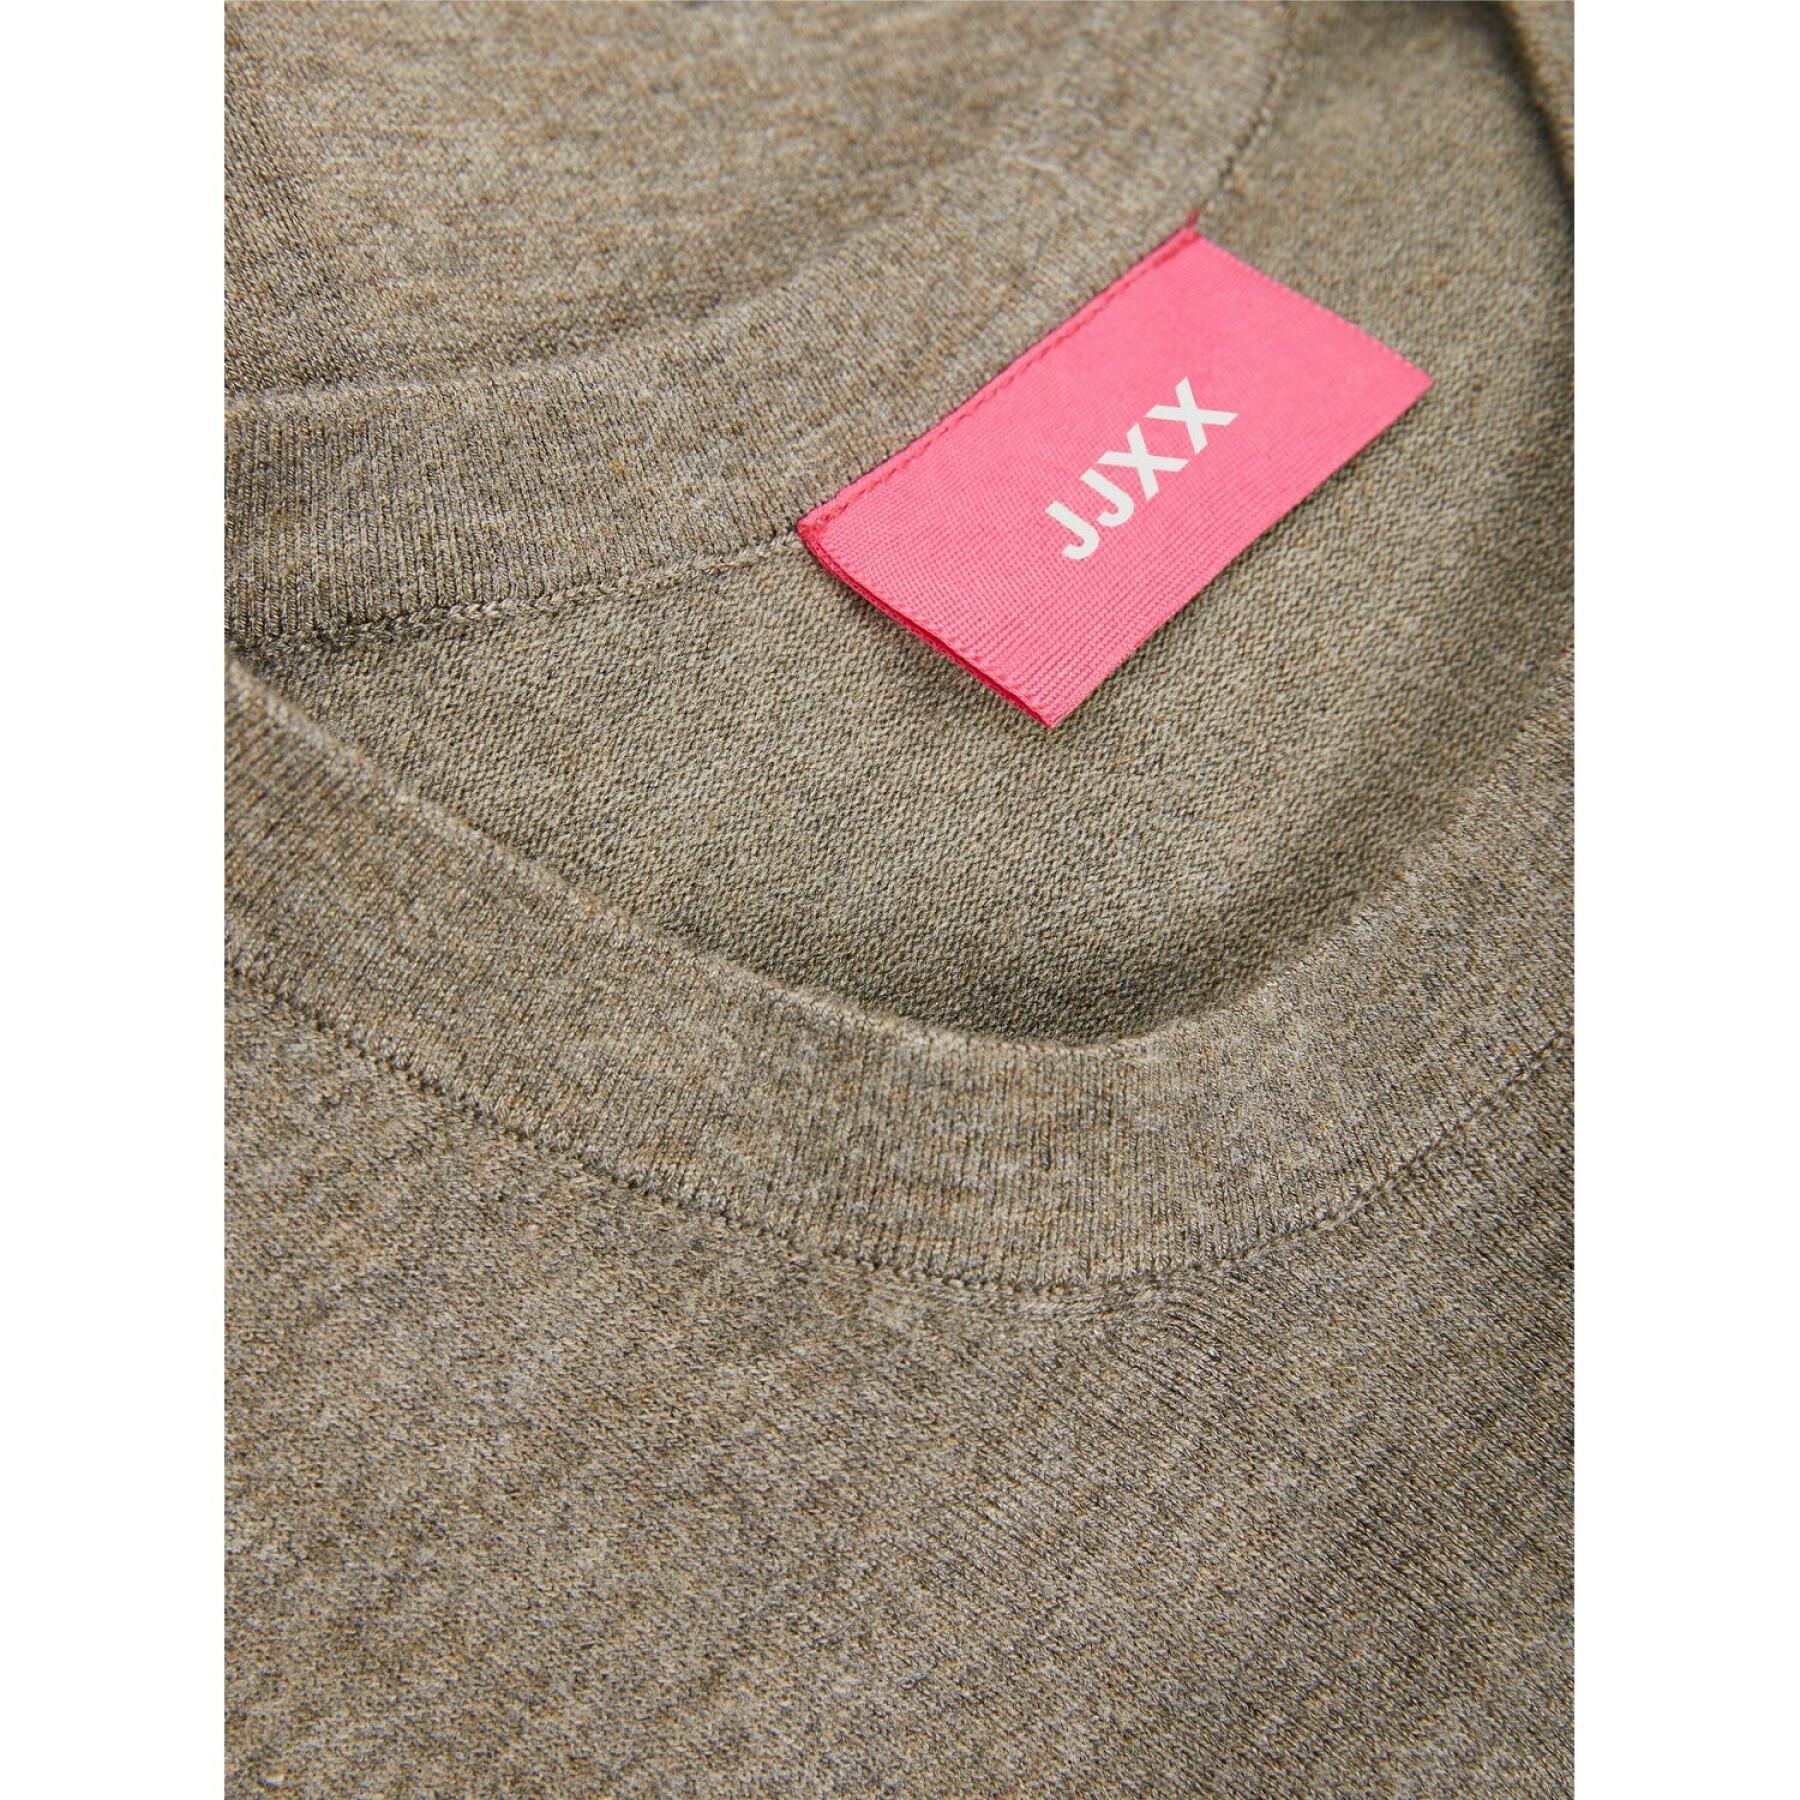 Women's long-sleeved sweater JJXX lara soft